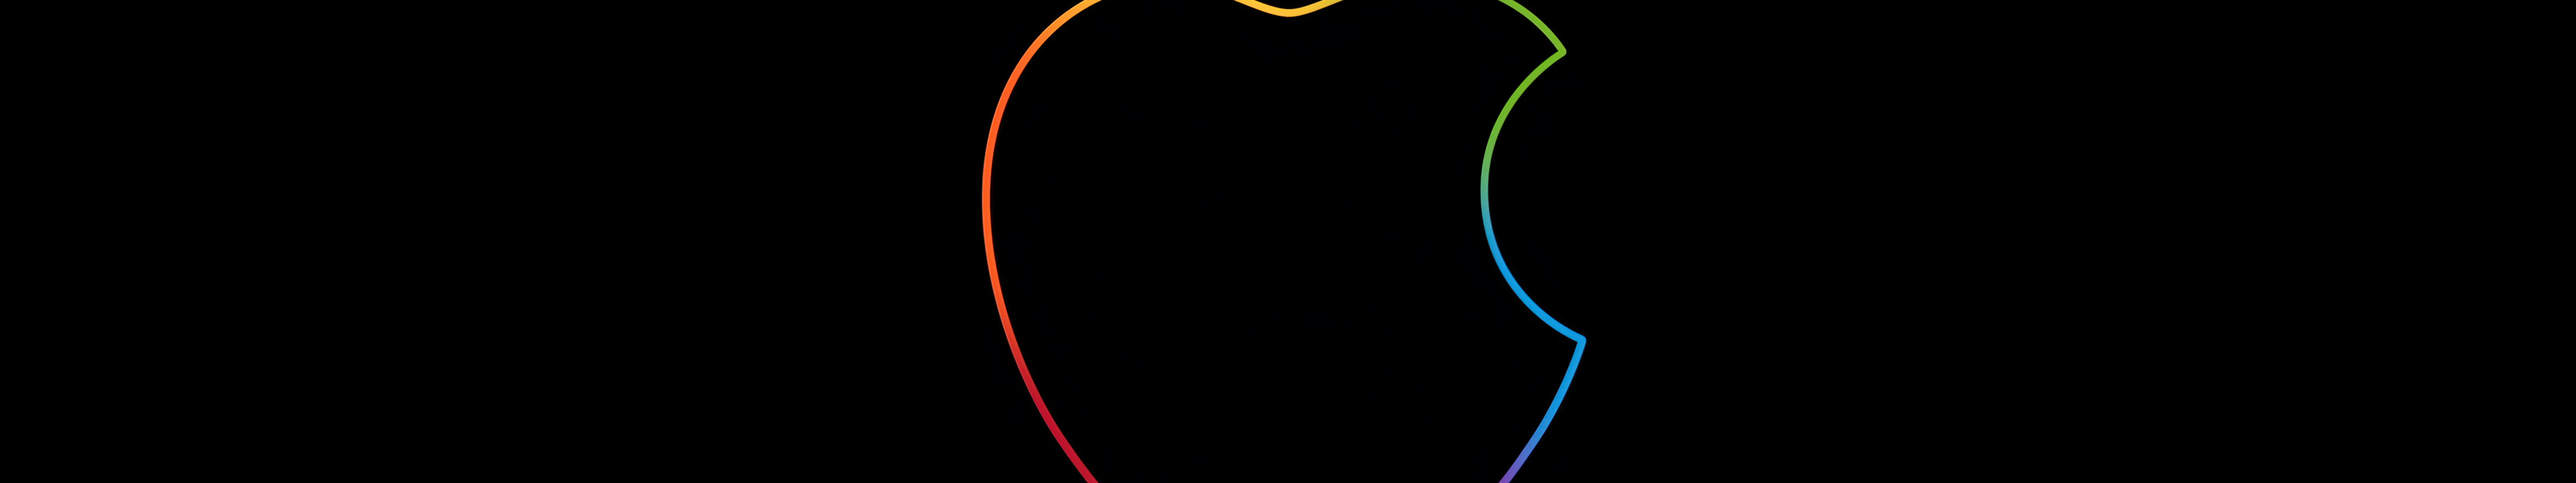 7680x1440 Apple 4k Neon Logo 7680x1440 Resolution Wallpaper, HD Hi-Tech ...